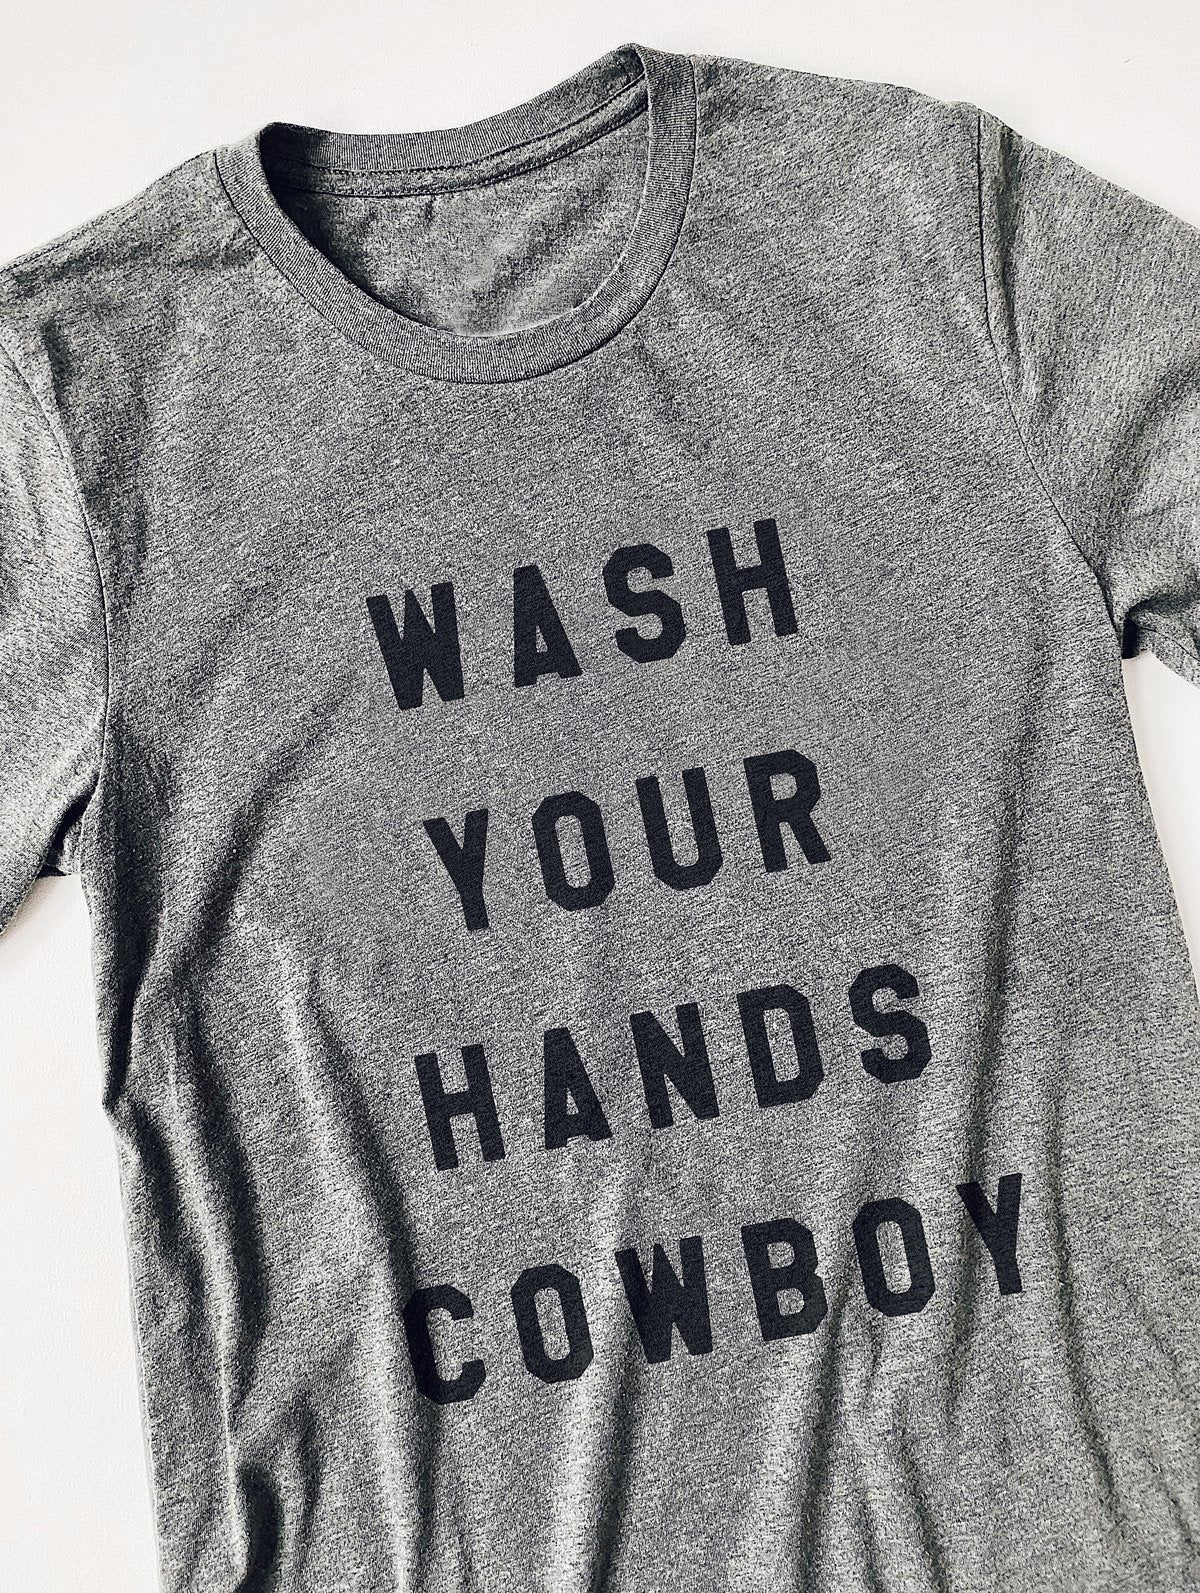 Wash Your Hands Cowboy